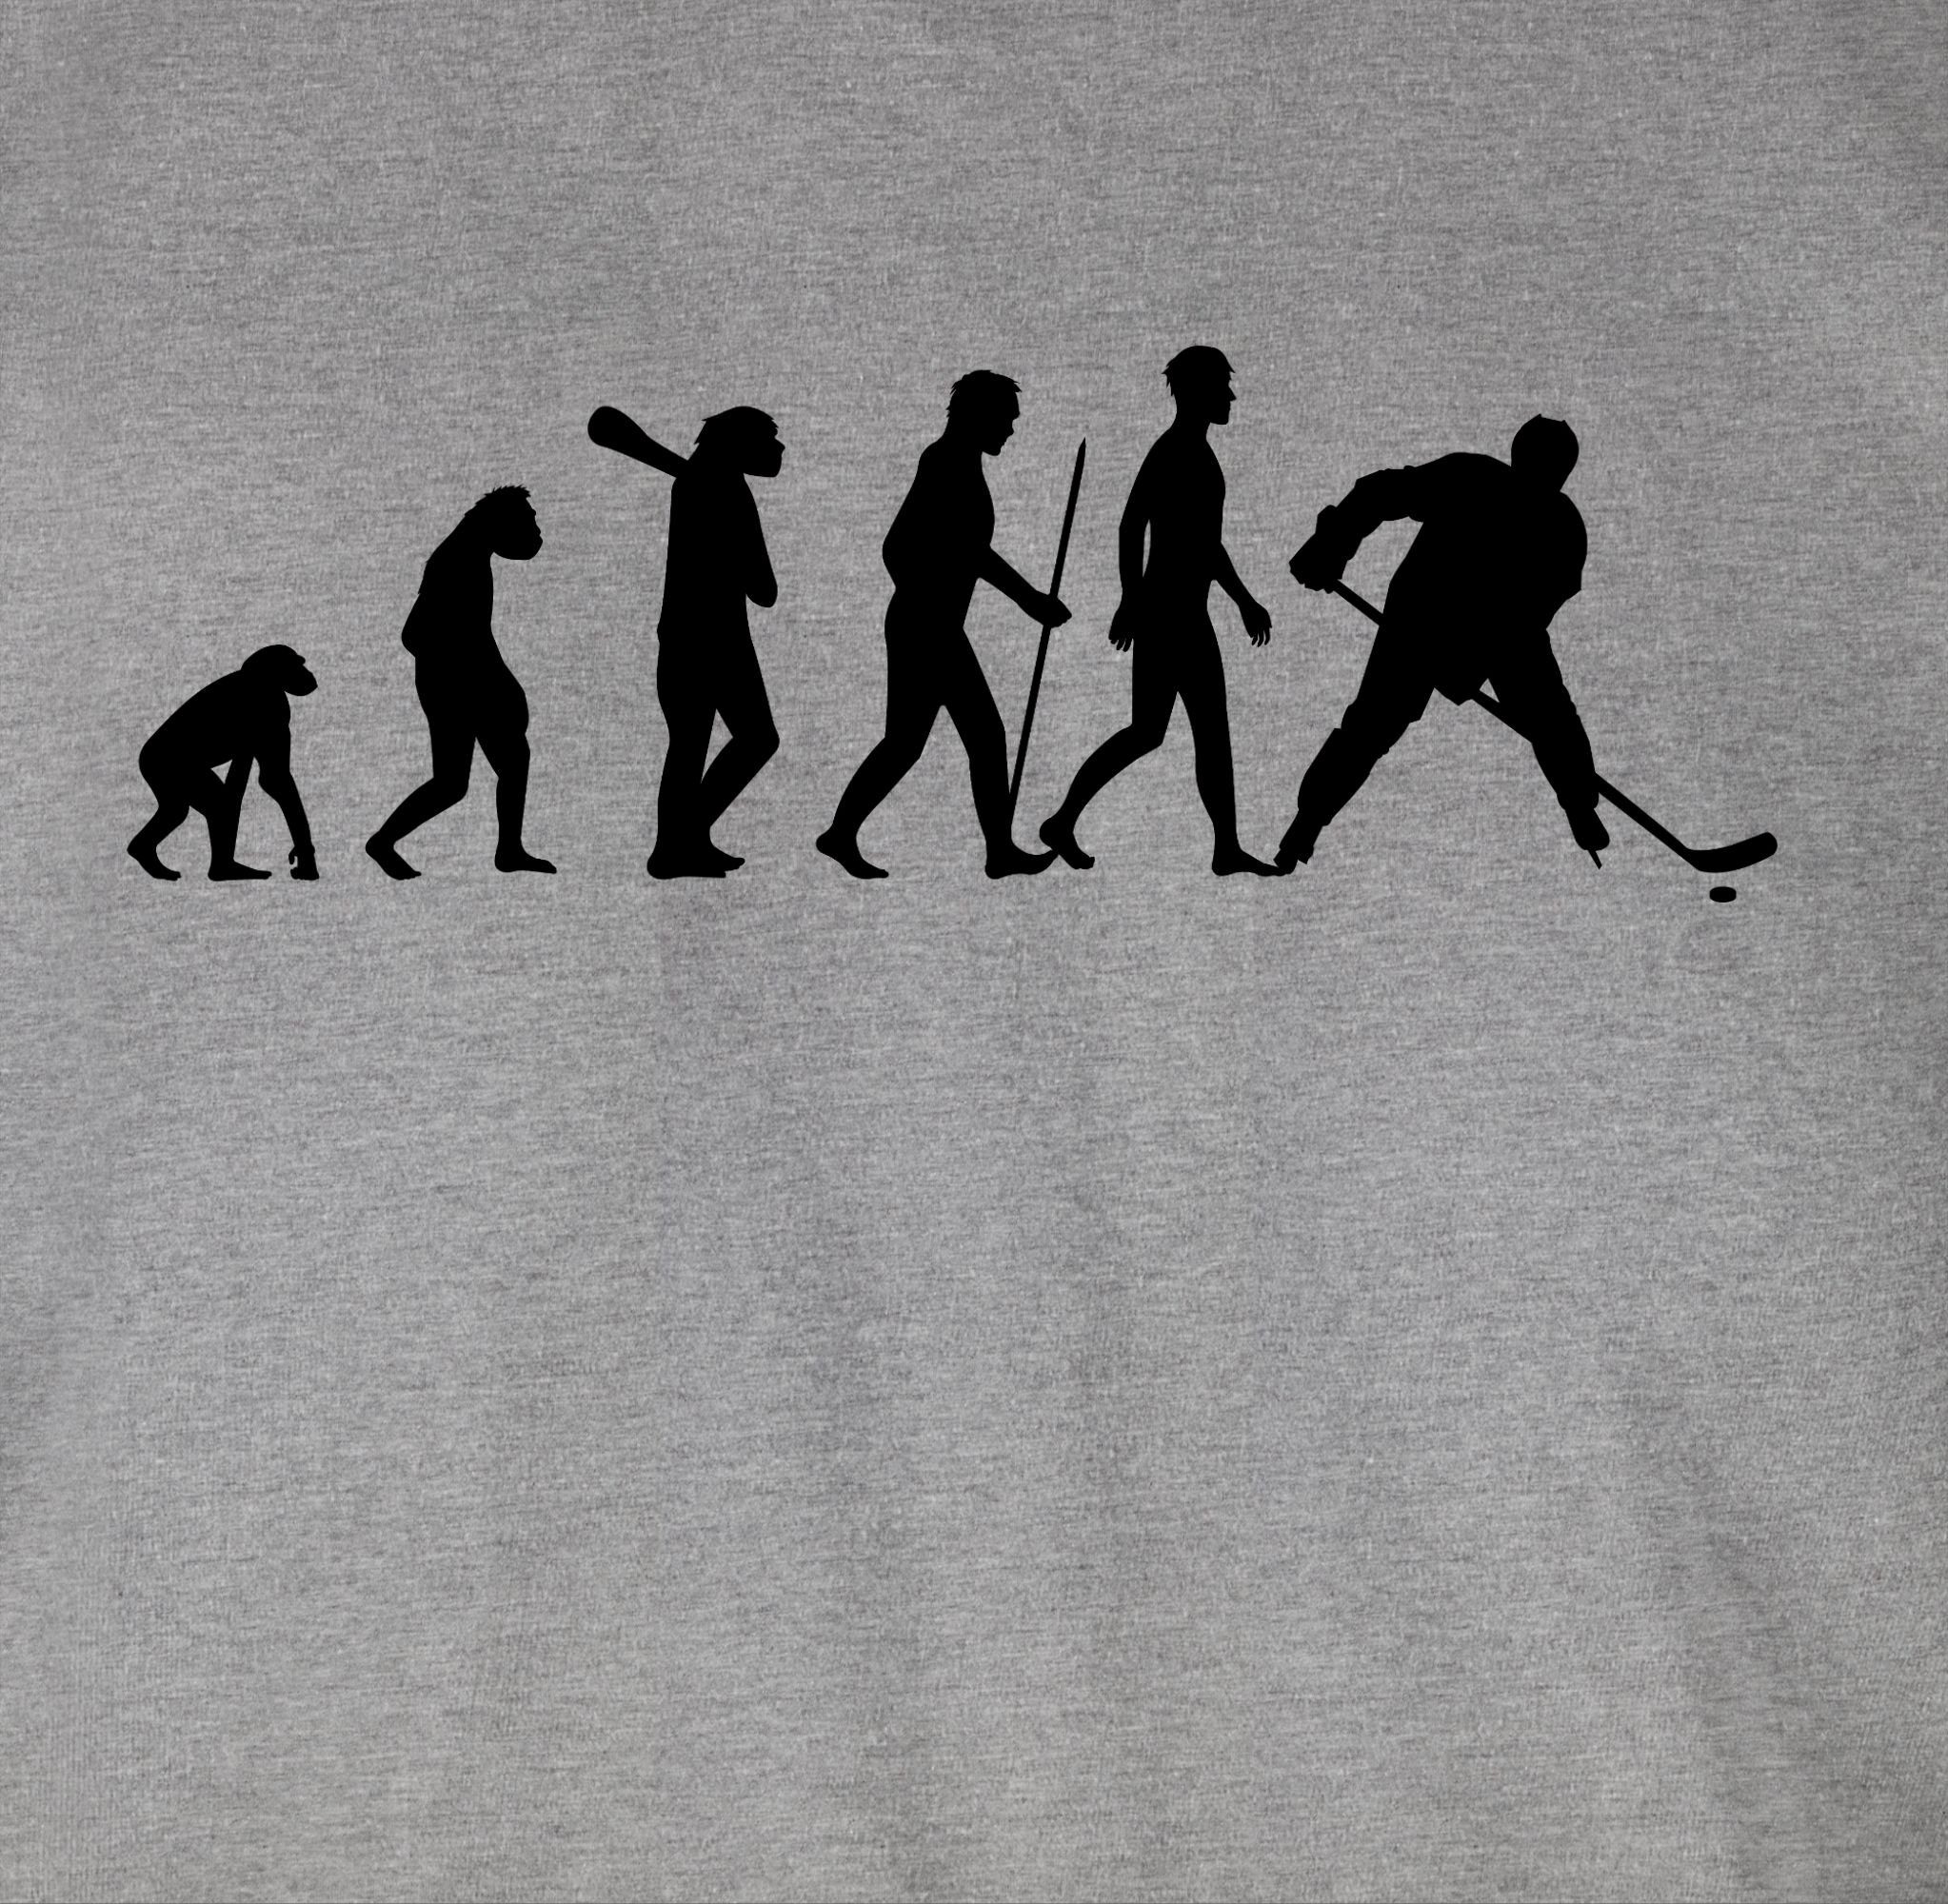 T-Shirt Outfit meliert Evolution 2 Shirtracer Grau Evolution Eishockey